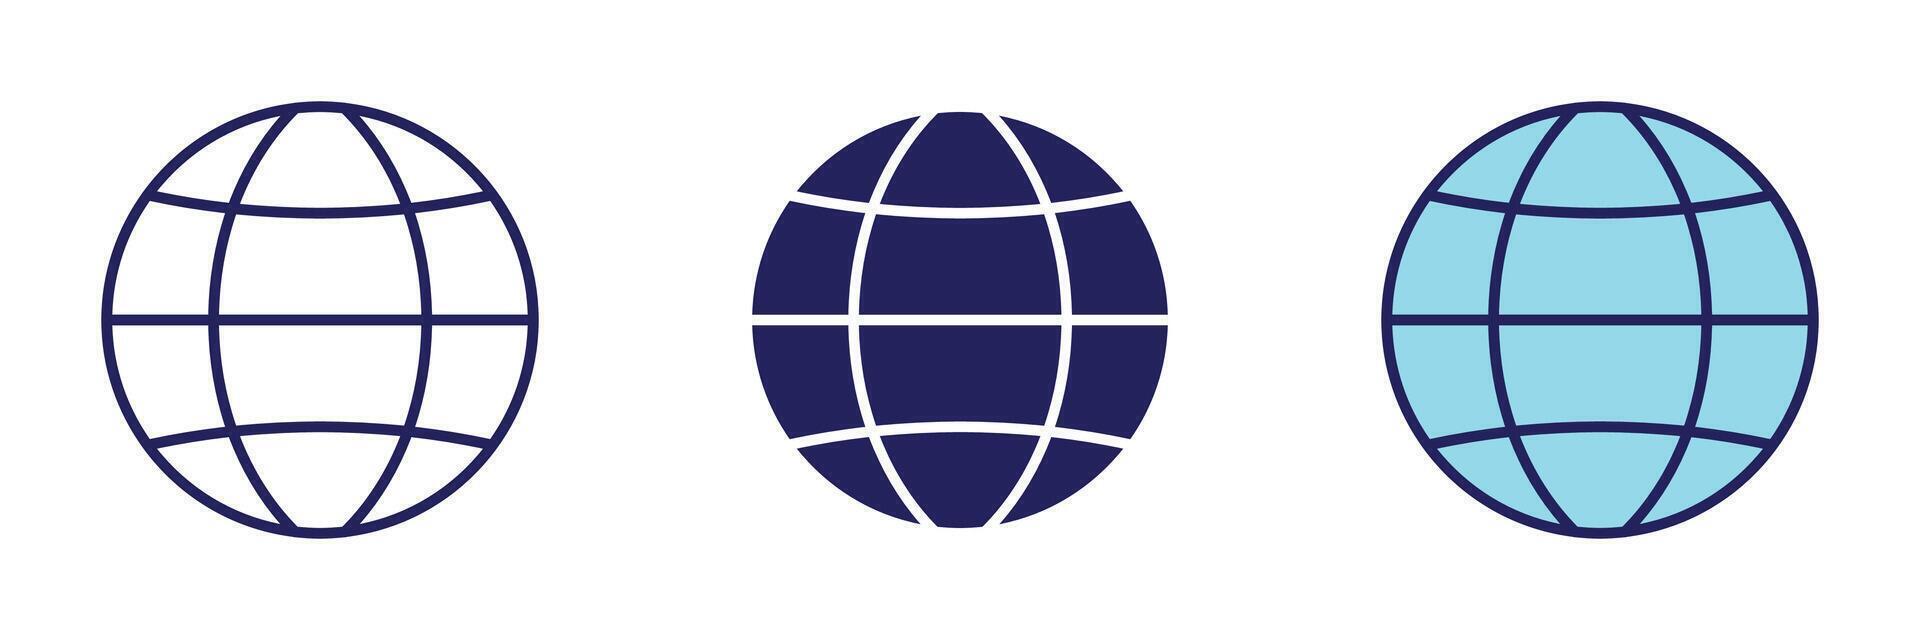 Globe Earth Icon - Navigation Set vector